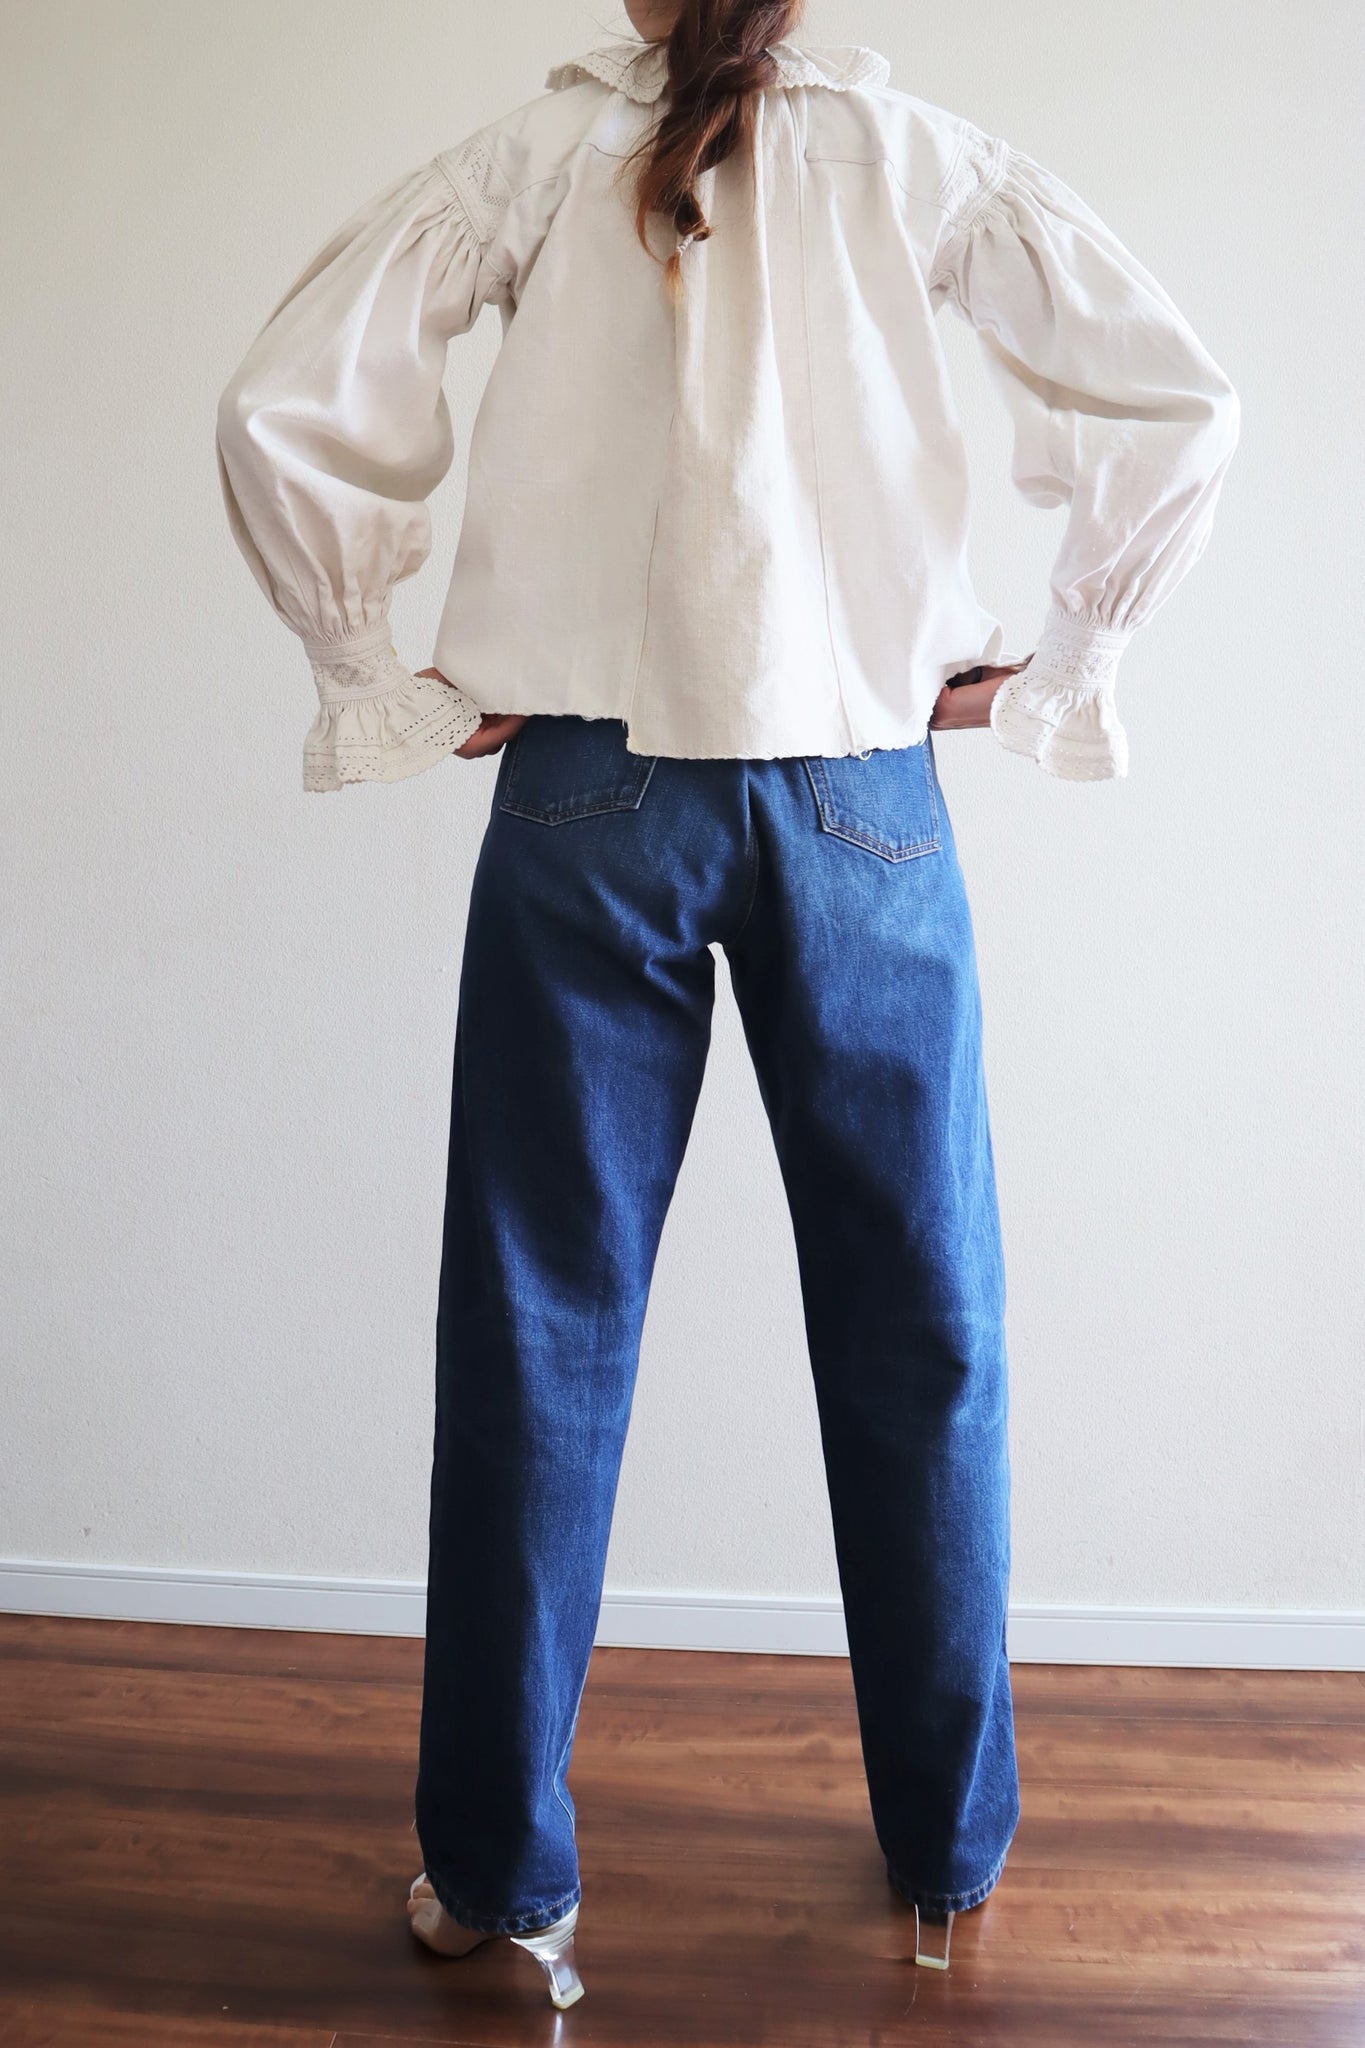 Yves Saint Laurent Denim Pants Made In Italy